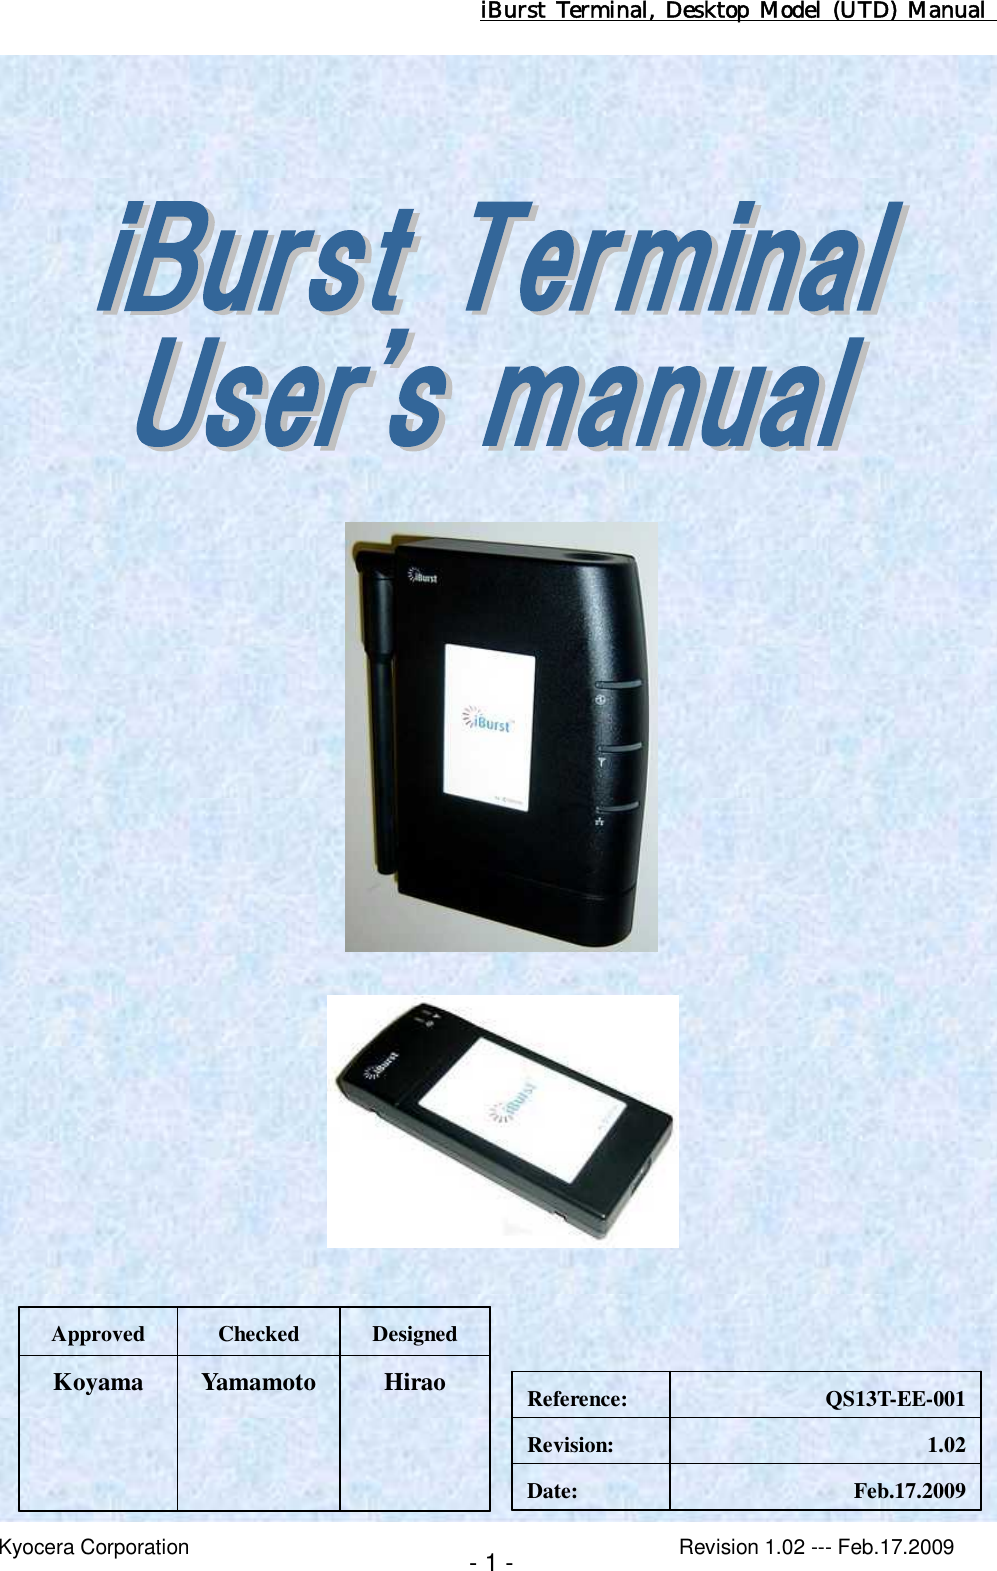 iBurst  Terminal, Desktop  Model  (UTD)  Manual    Kyocera Corporation                                                                                              Revision 1.02 --- Feb.17.2009 - 1 -        Hirao Yamamoto Koyama Designed Checked Approved Feb.17.2009 Date: 1.02 Revision: QS13T-EE-001 Reference: 